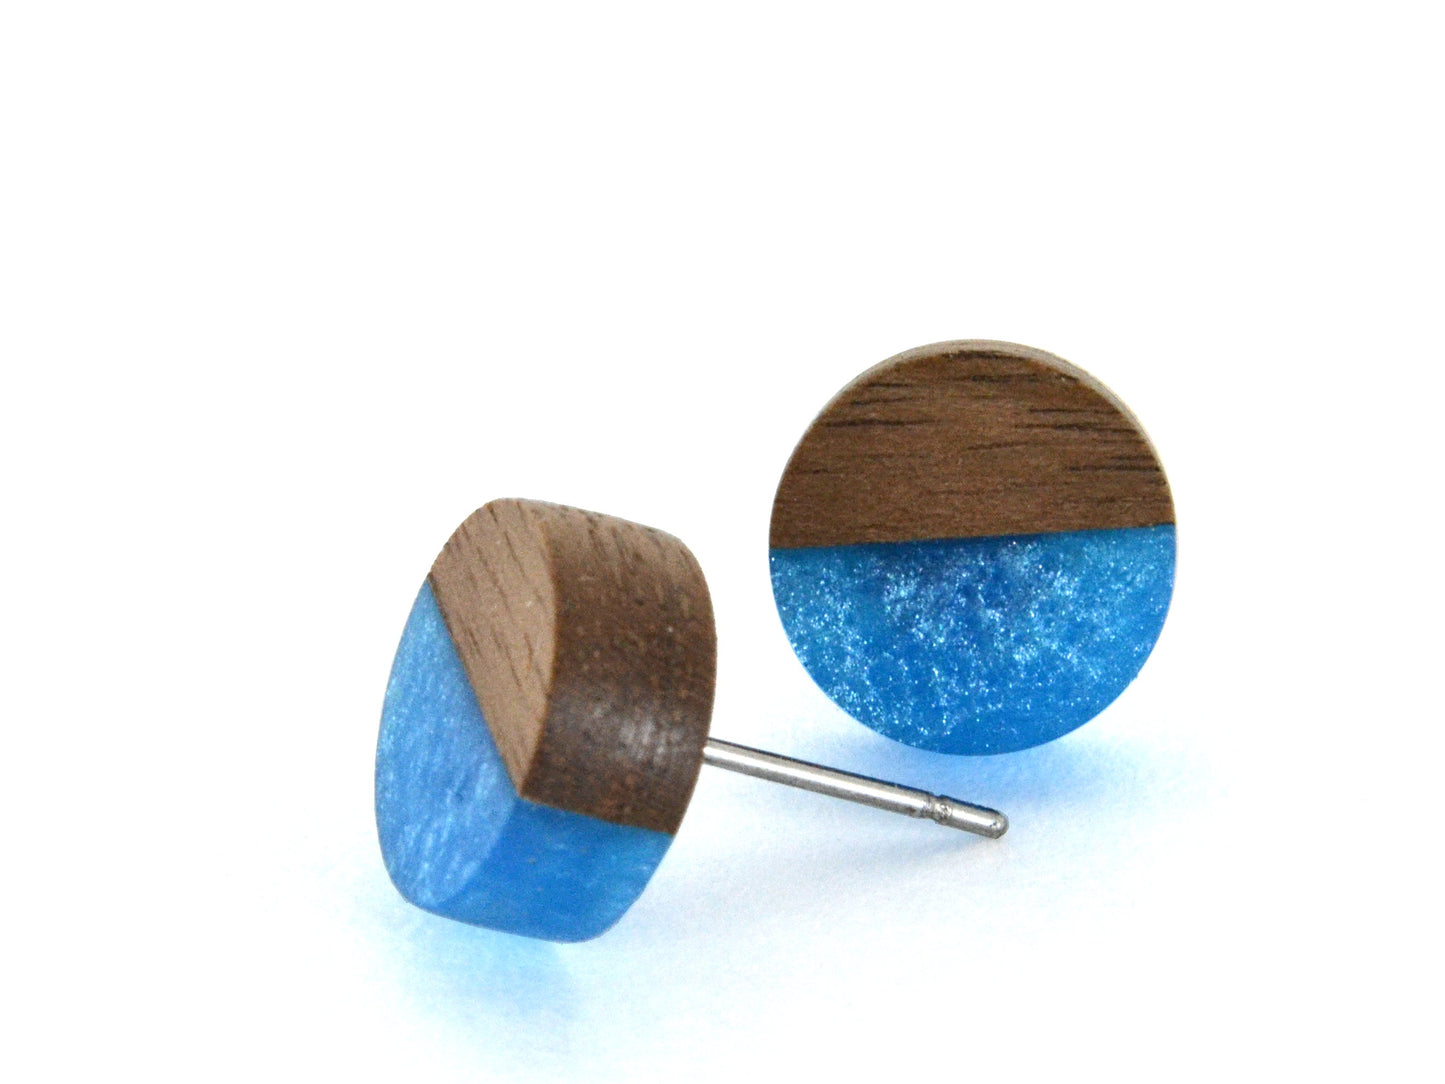 walnut and blue round stud earring pair, nickel free